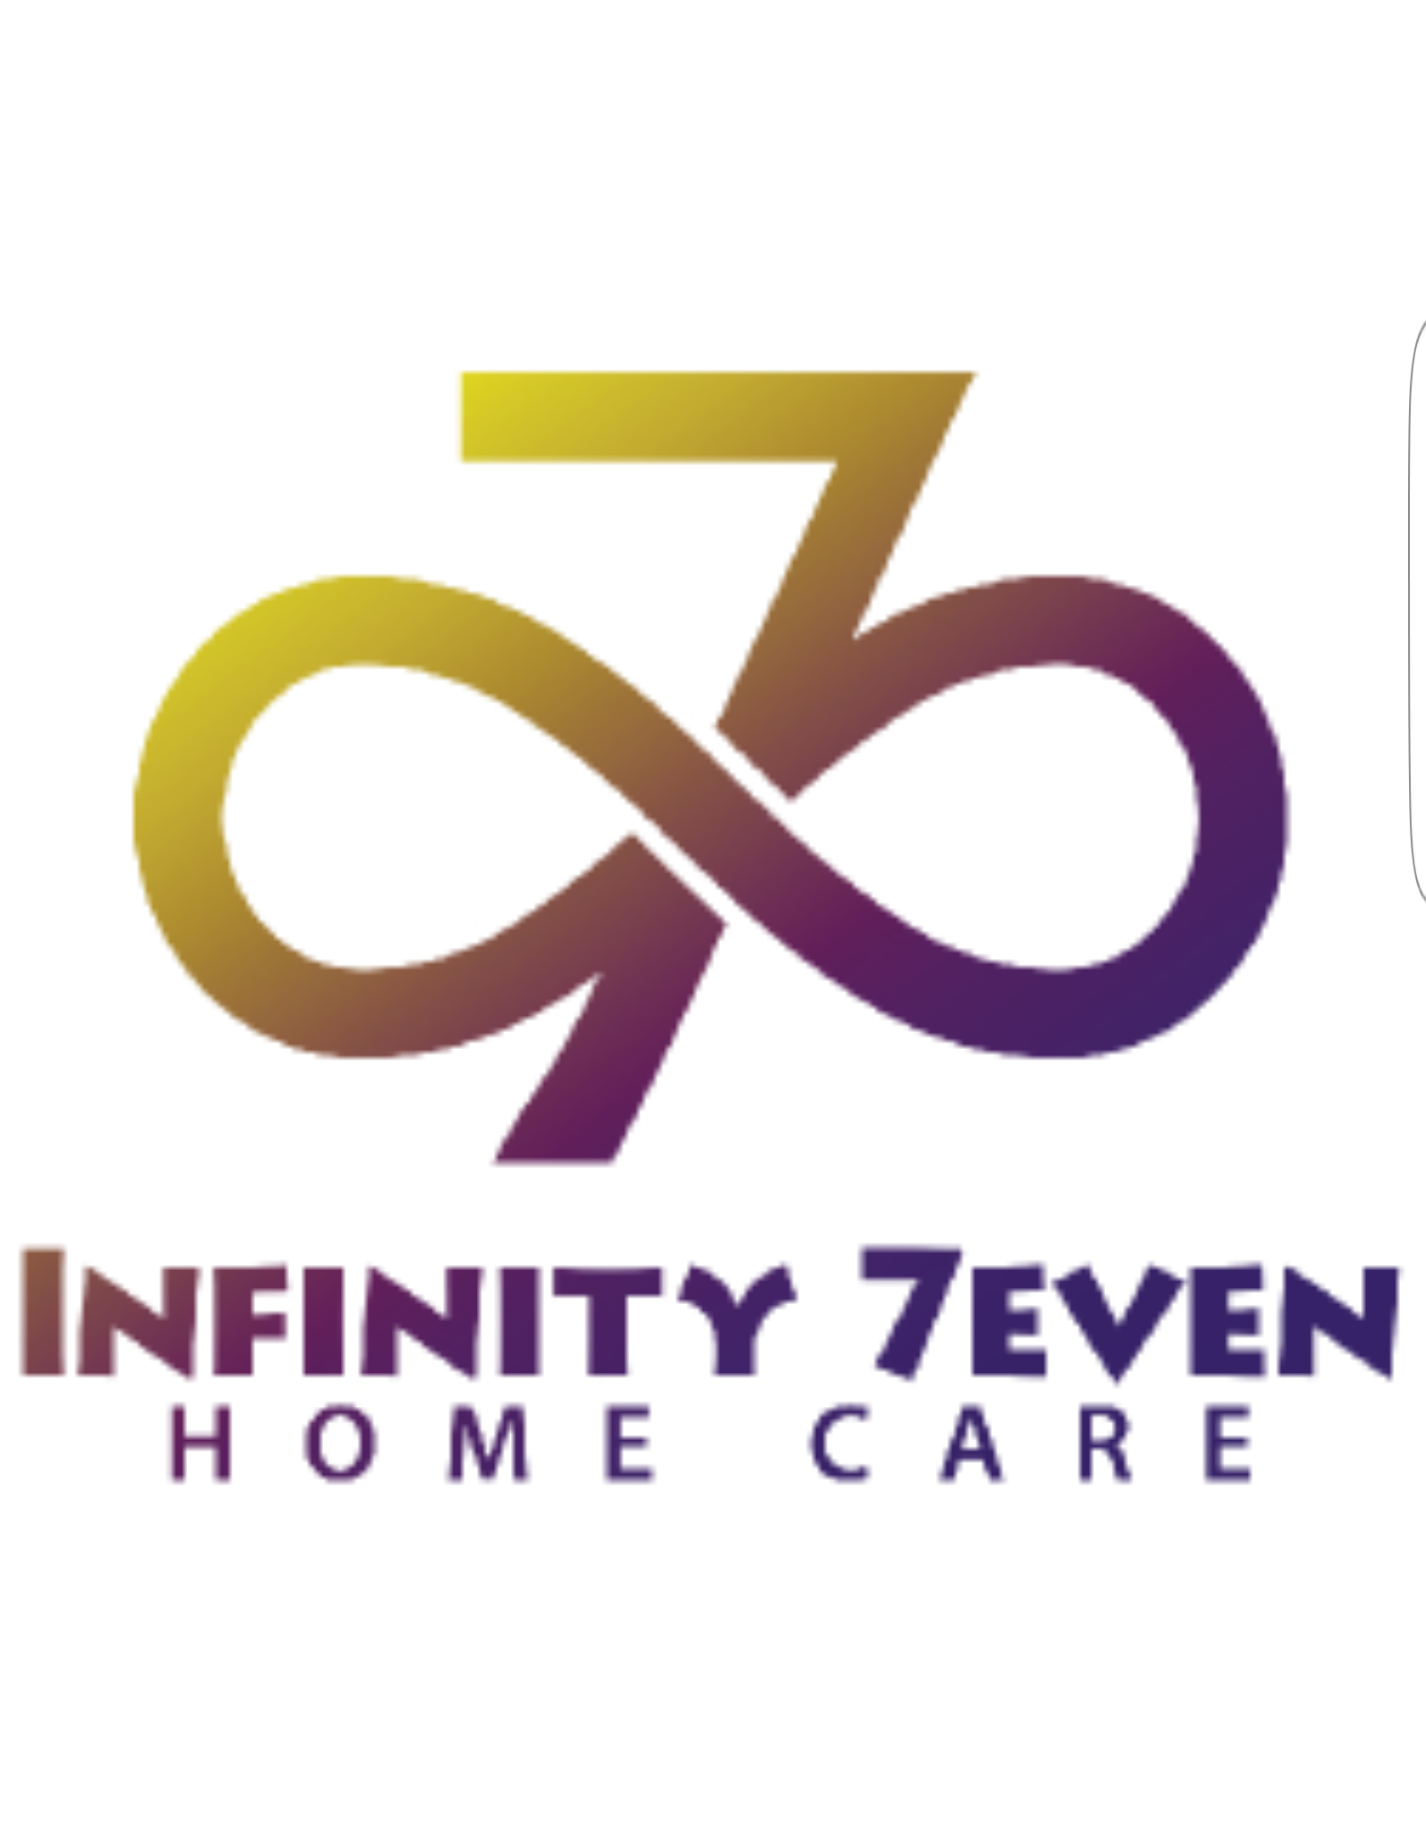 Infinity 7even Homecare, LLC at Durham, NC